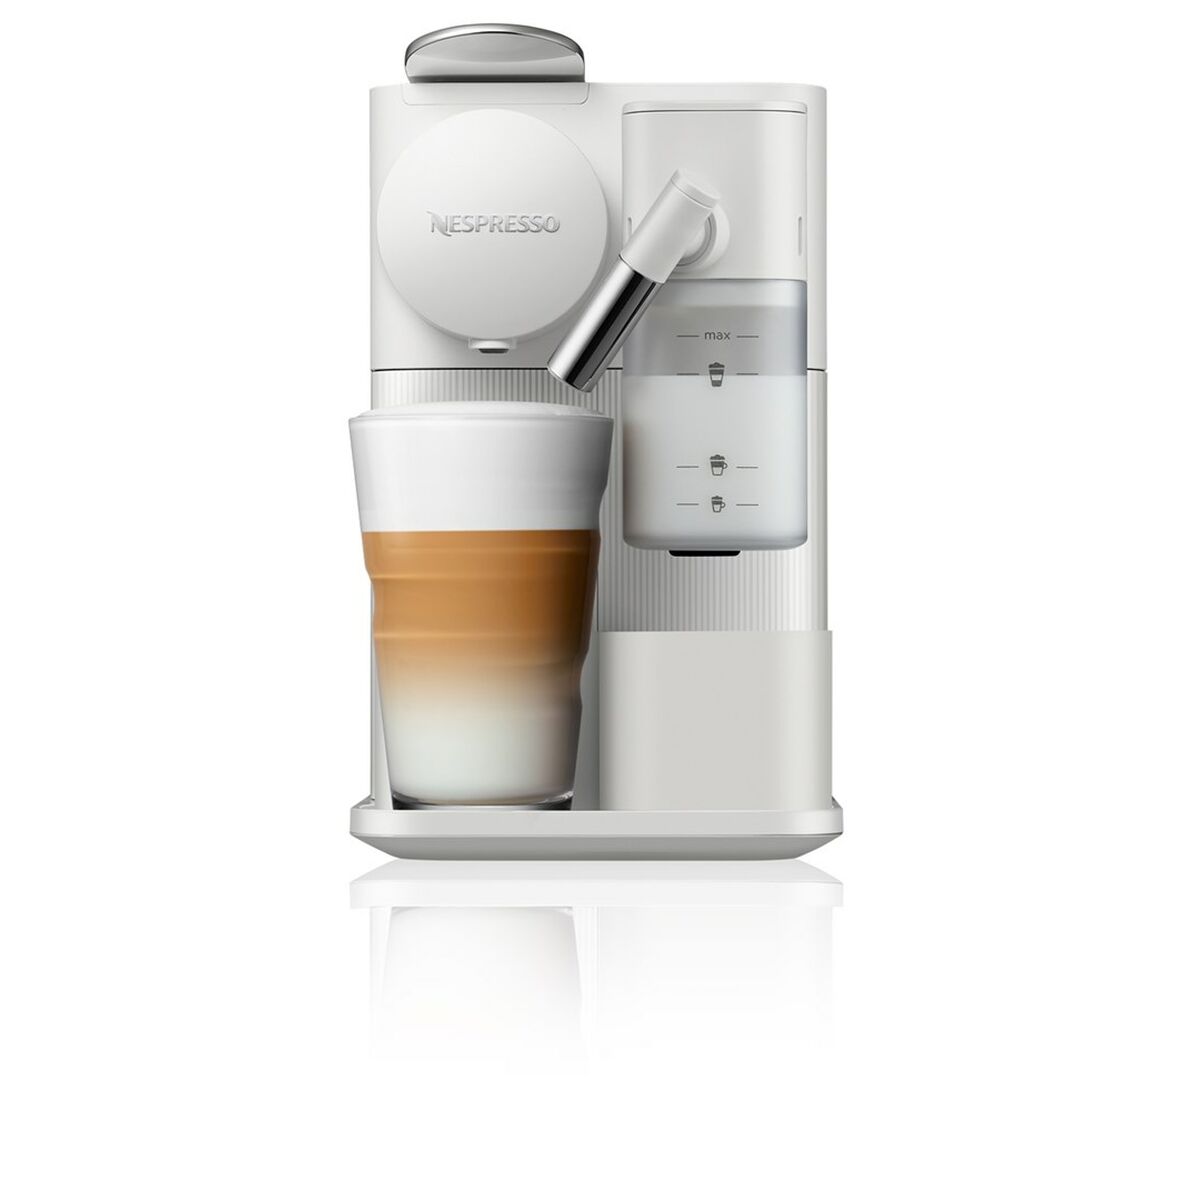 Superautomatische Kaffeemaschine DeLonghi EN510.W Weiß 1400 W 19 bar 1 L - CA International 